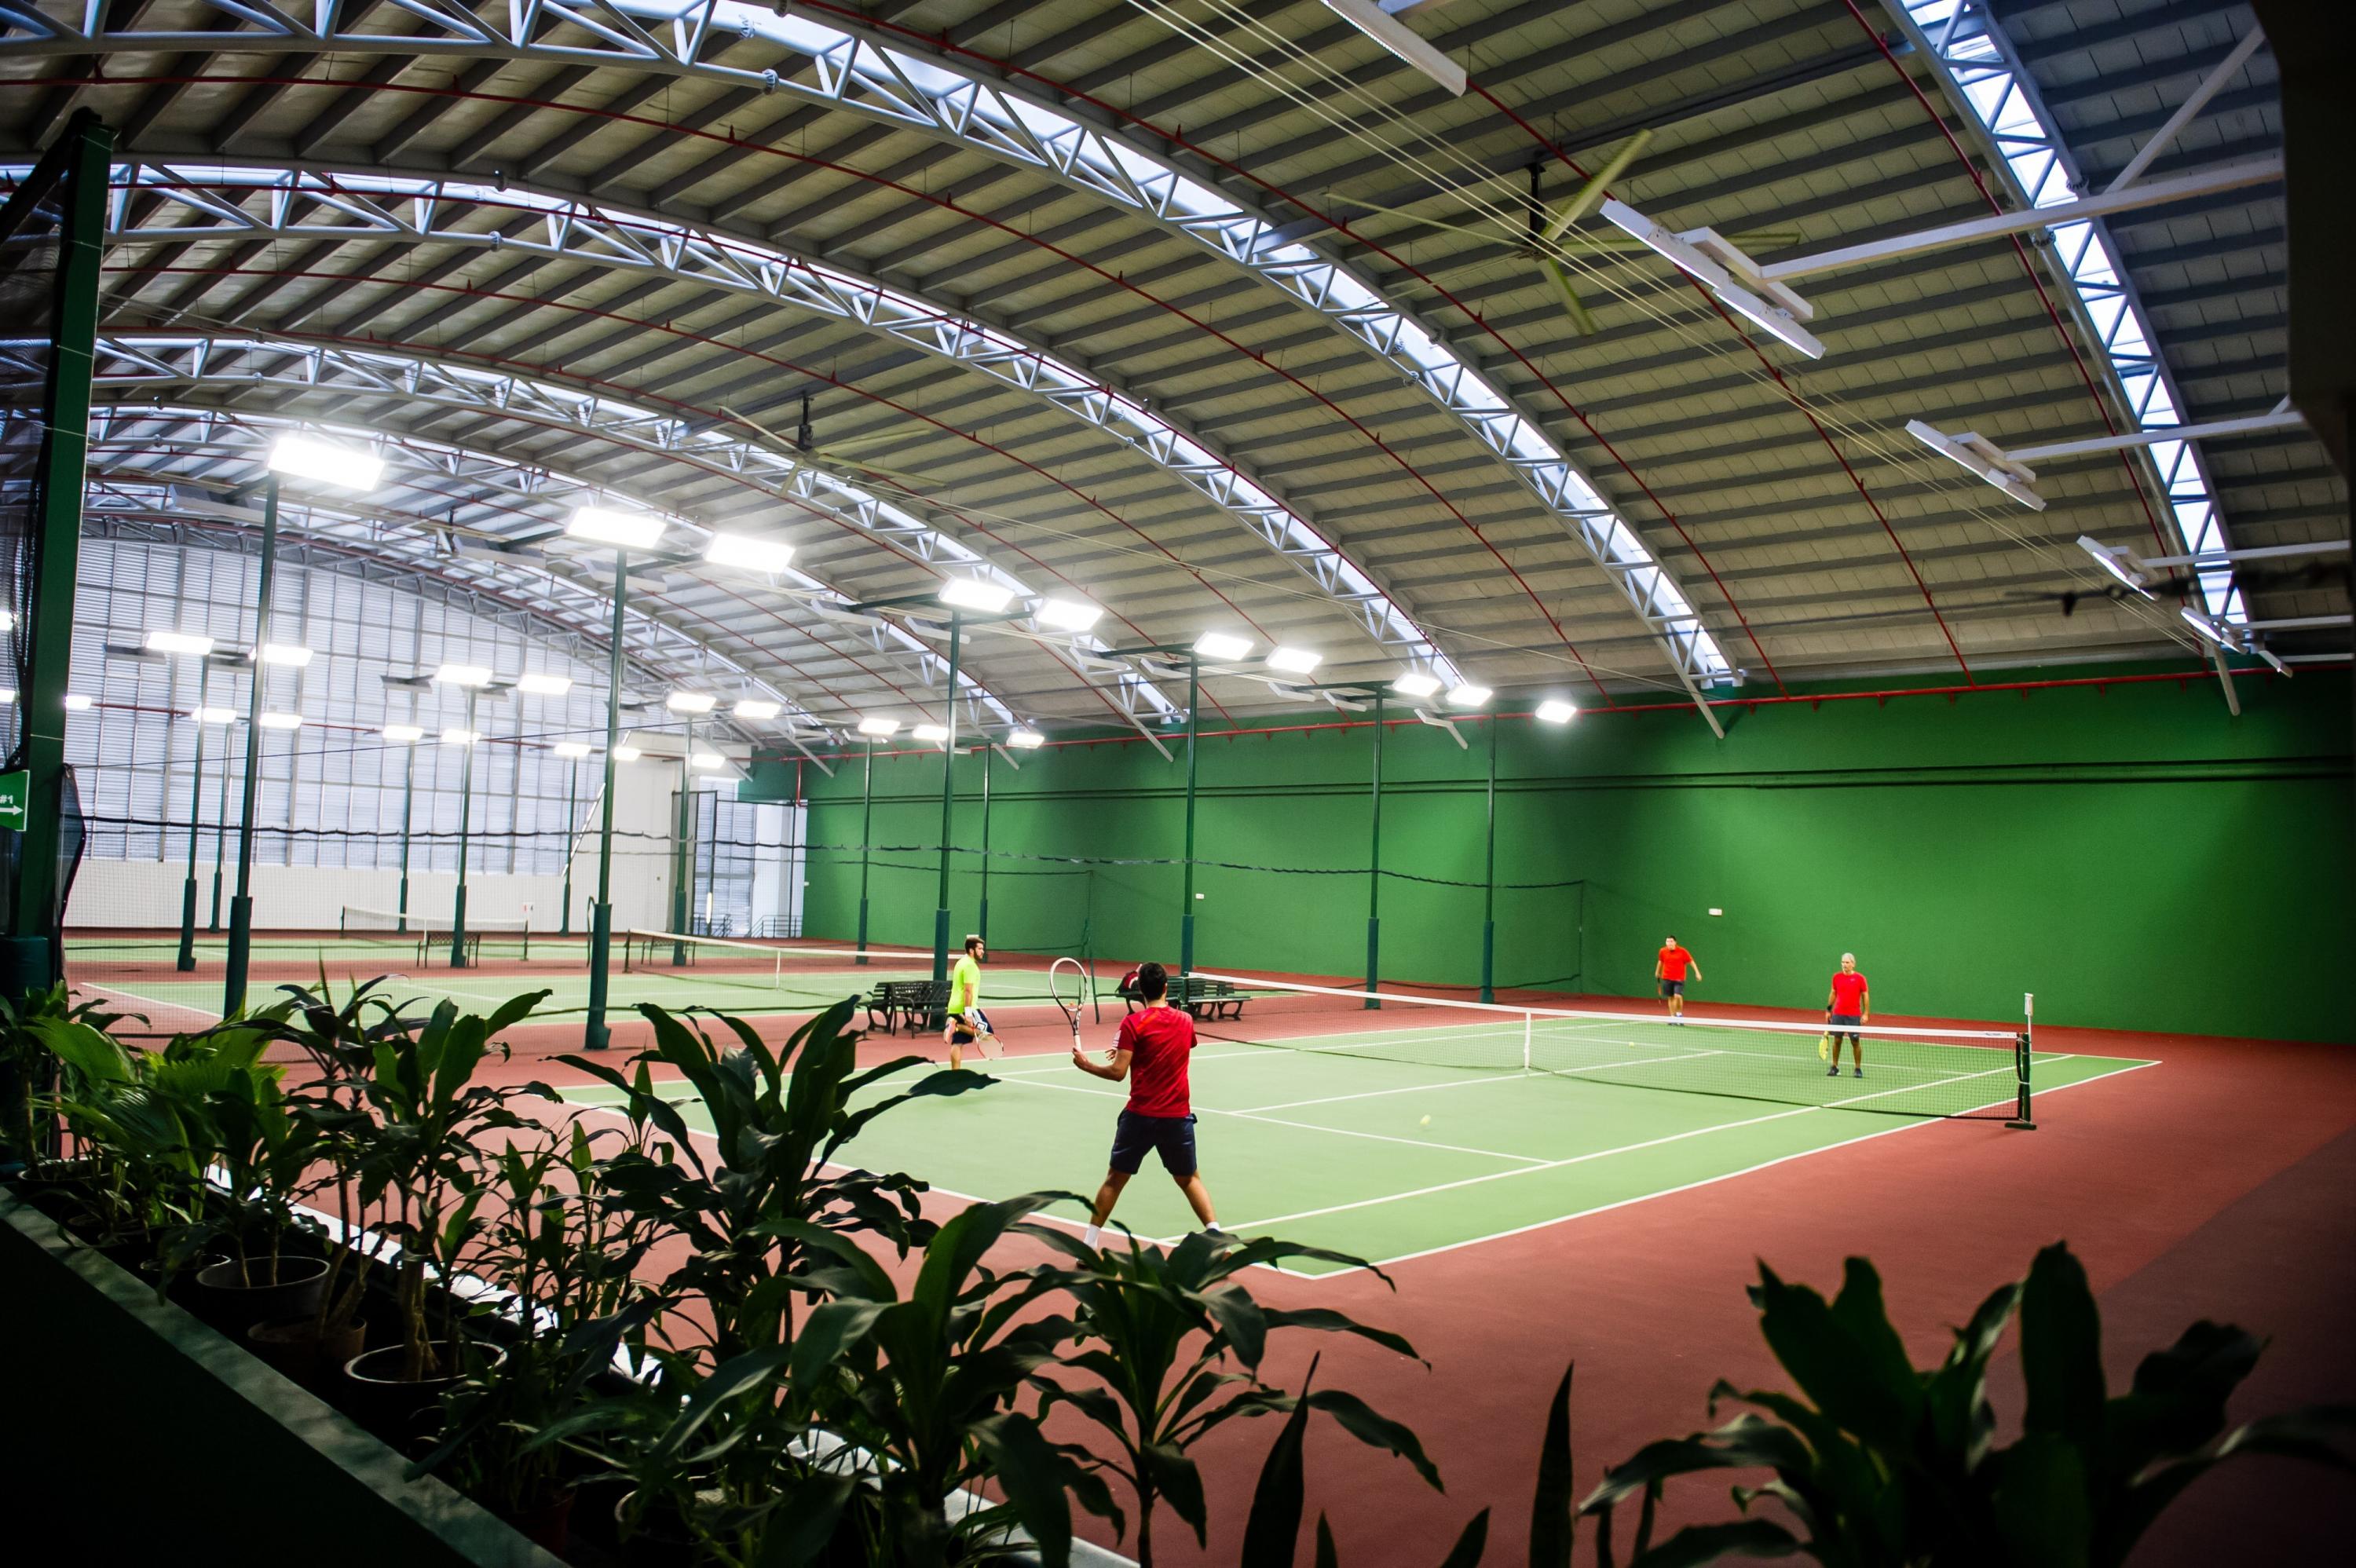 Tennis courts at Club Unión de Panama, where membership costs US$100,000. Photo: José Saenz/Club Unión